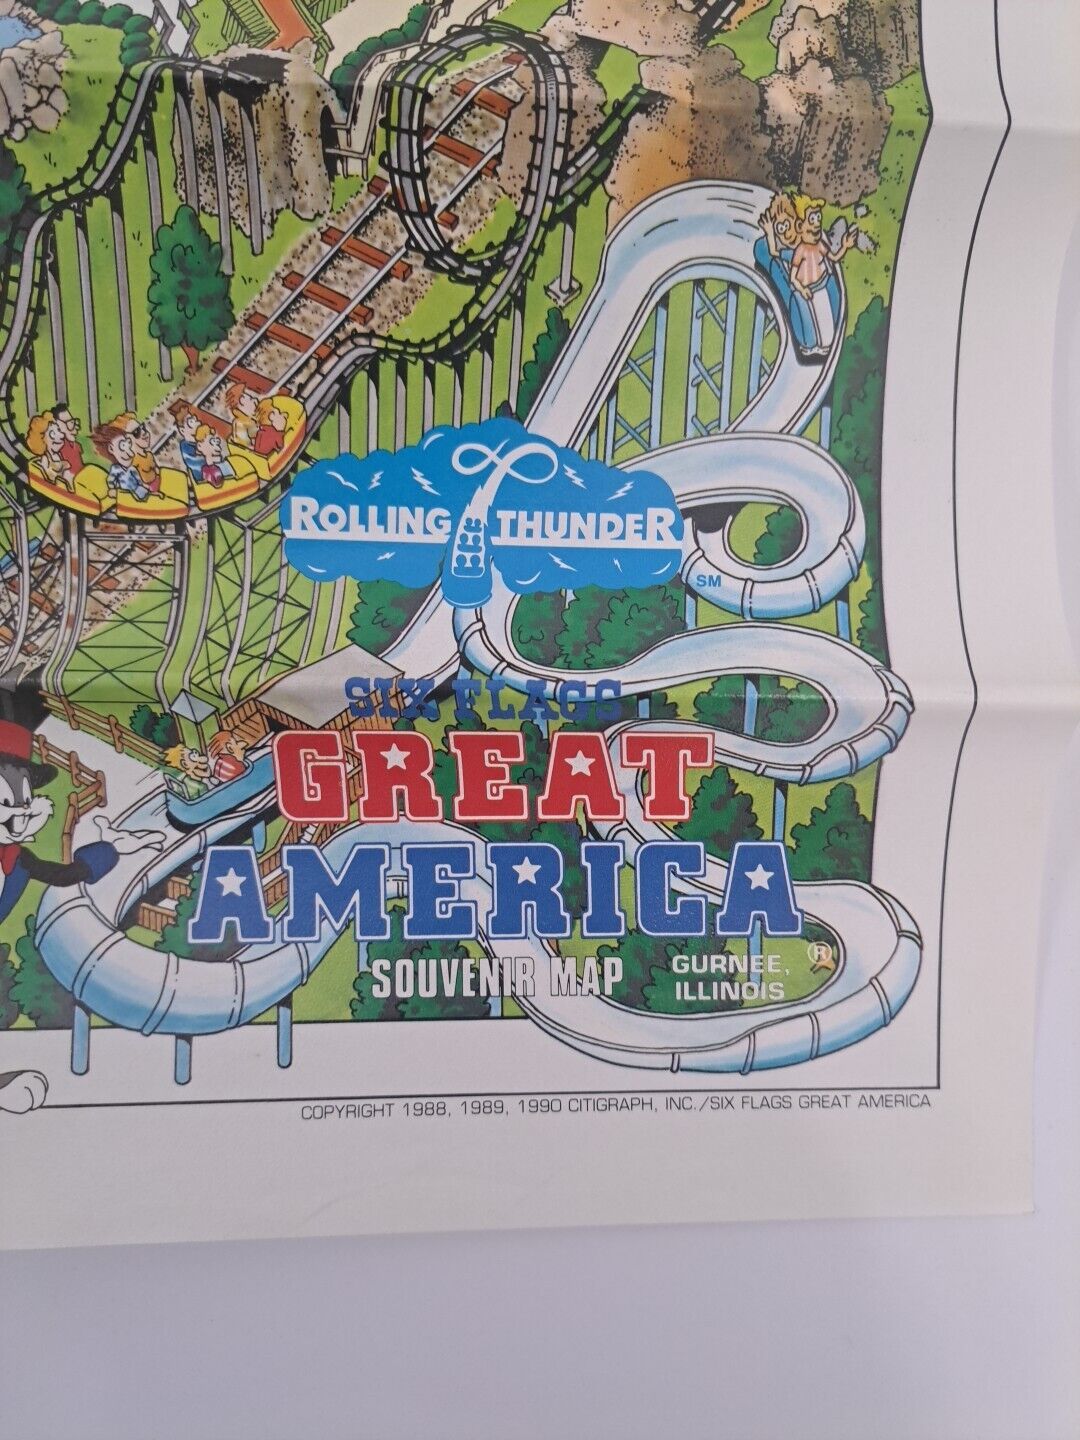 Six Flags Great America Amusement Park Souvenir Map- 1990 Gurnee Illinois